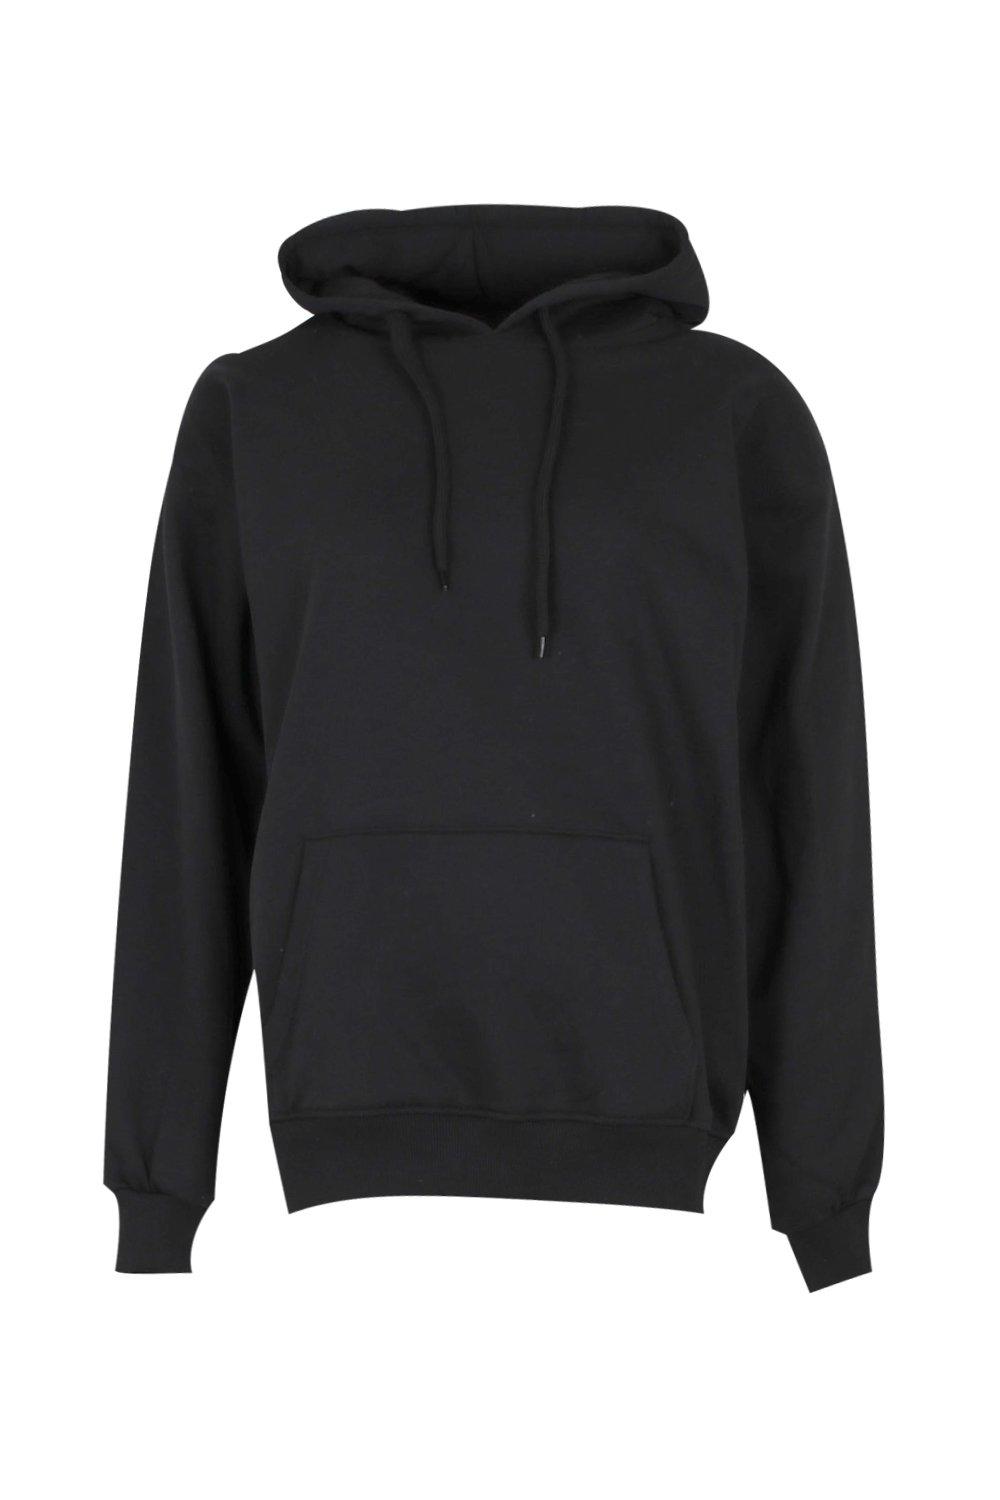 black oversized hoody